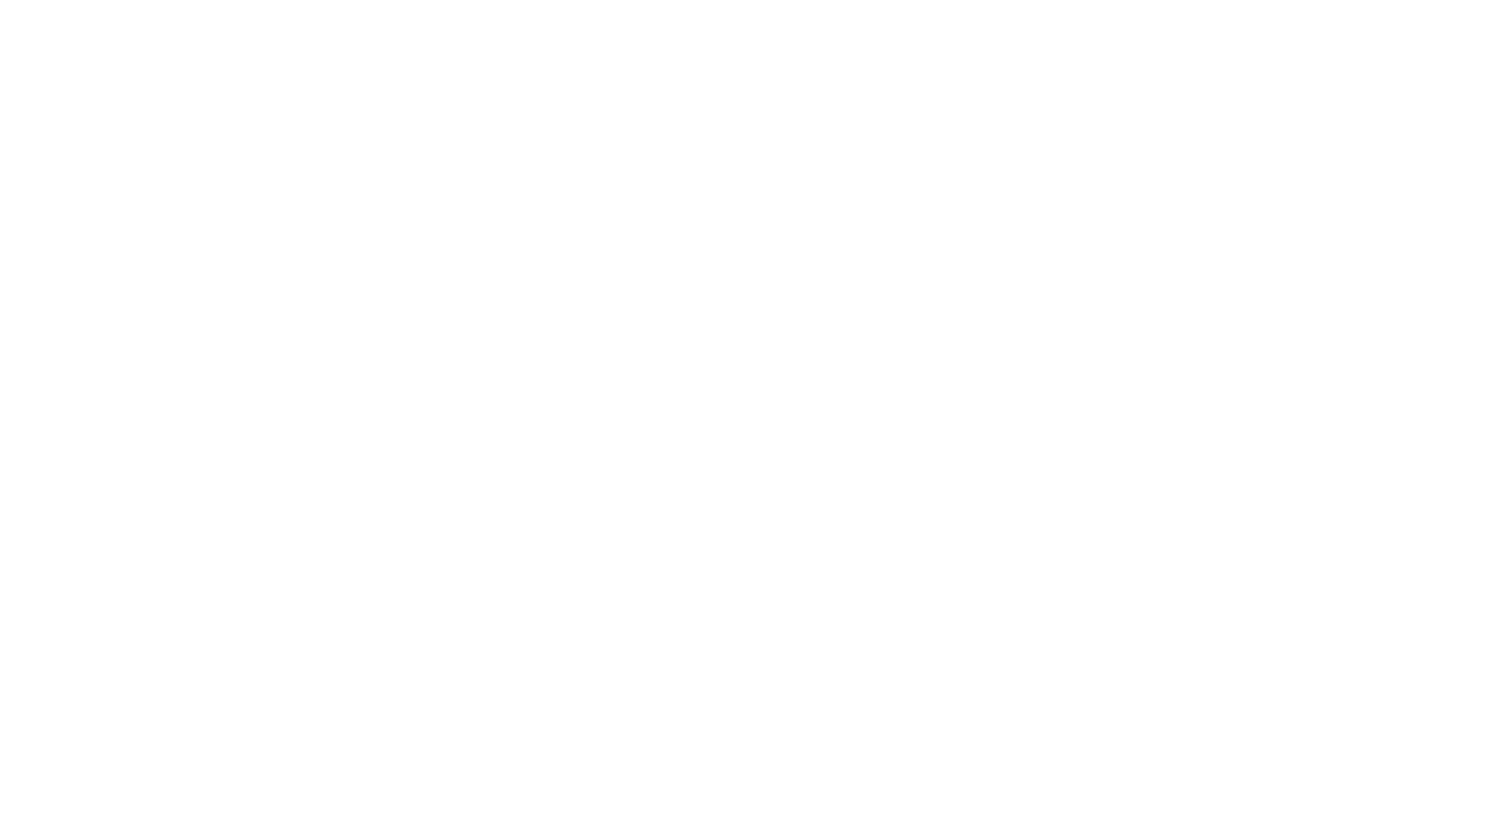 Vantage Capital Source